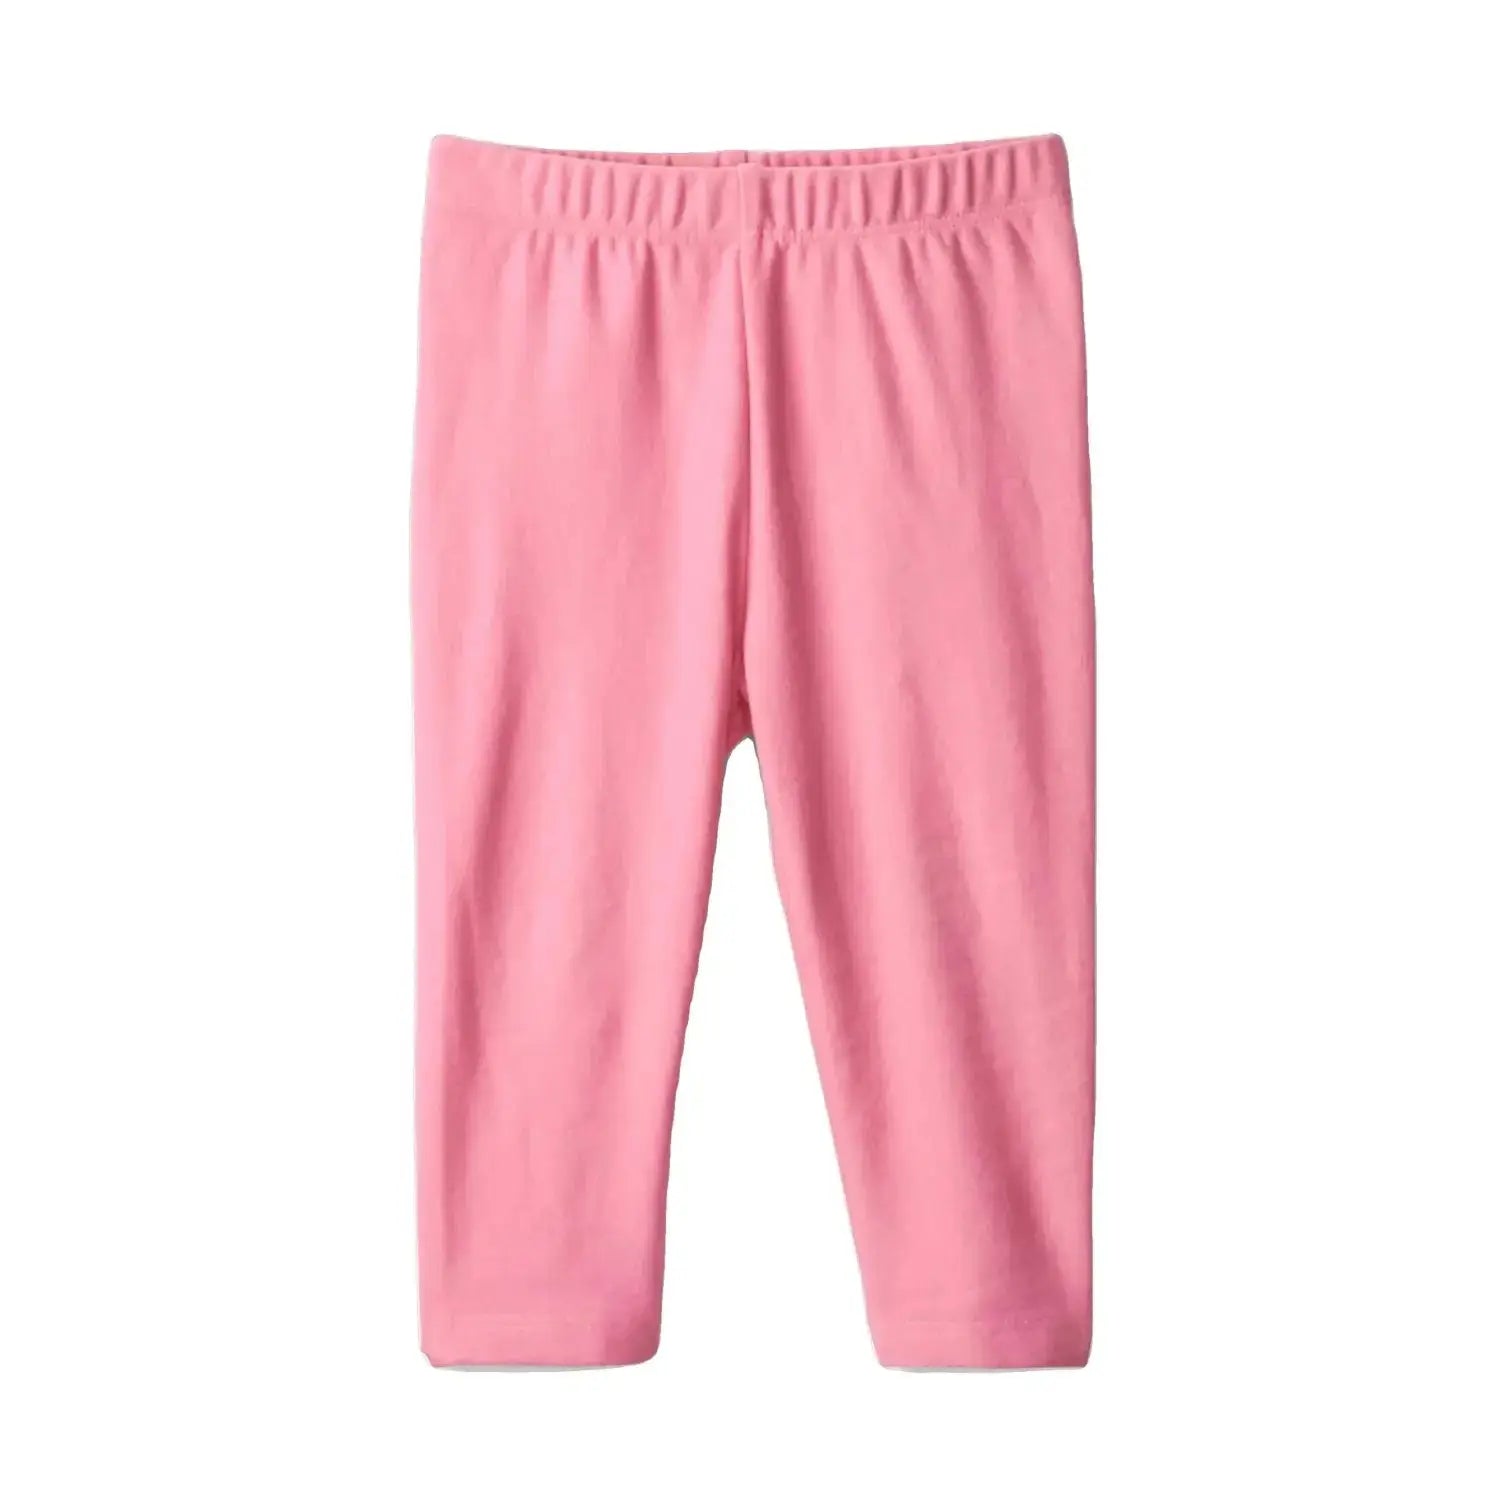 Hatley Baby Pink Cozy Leggings, Sachet Pink, front view 